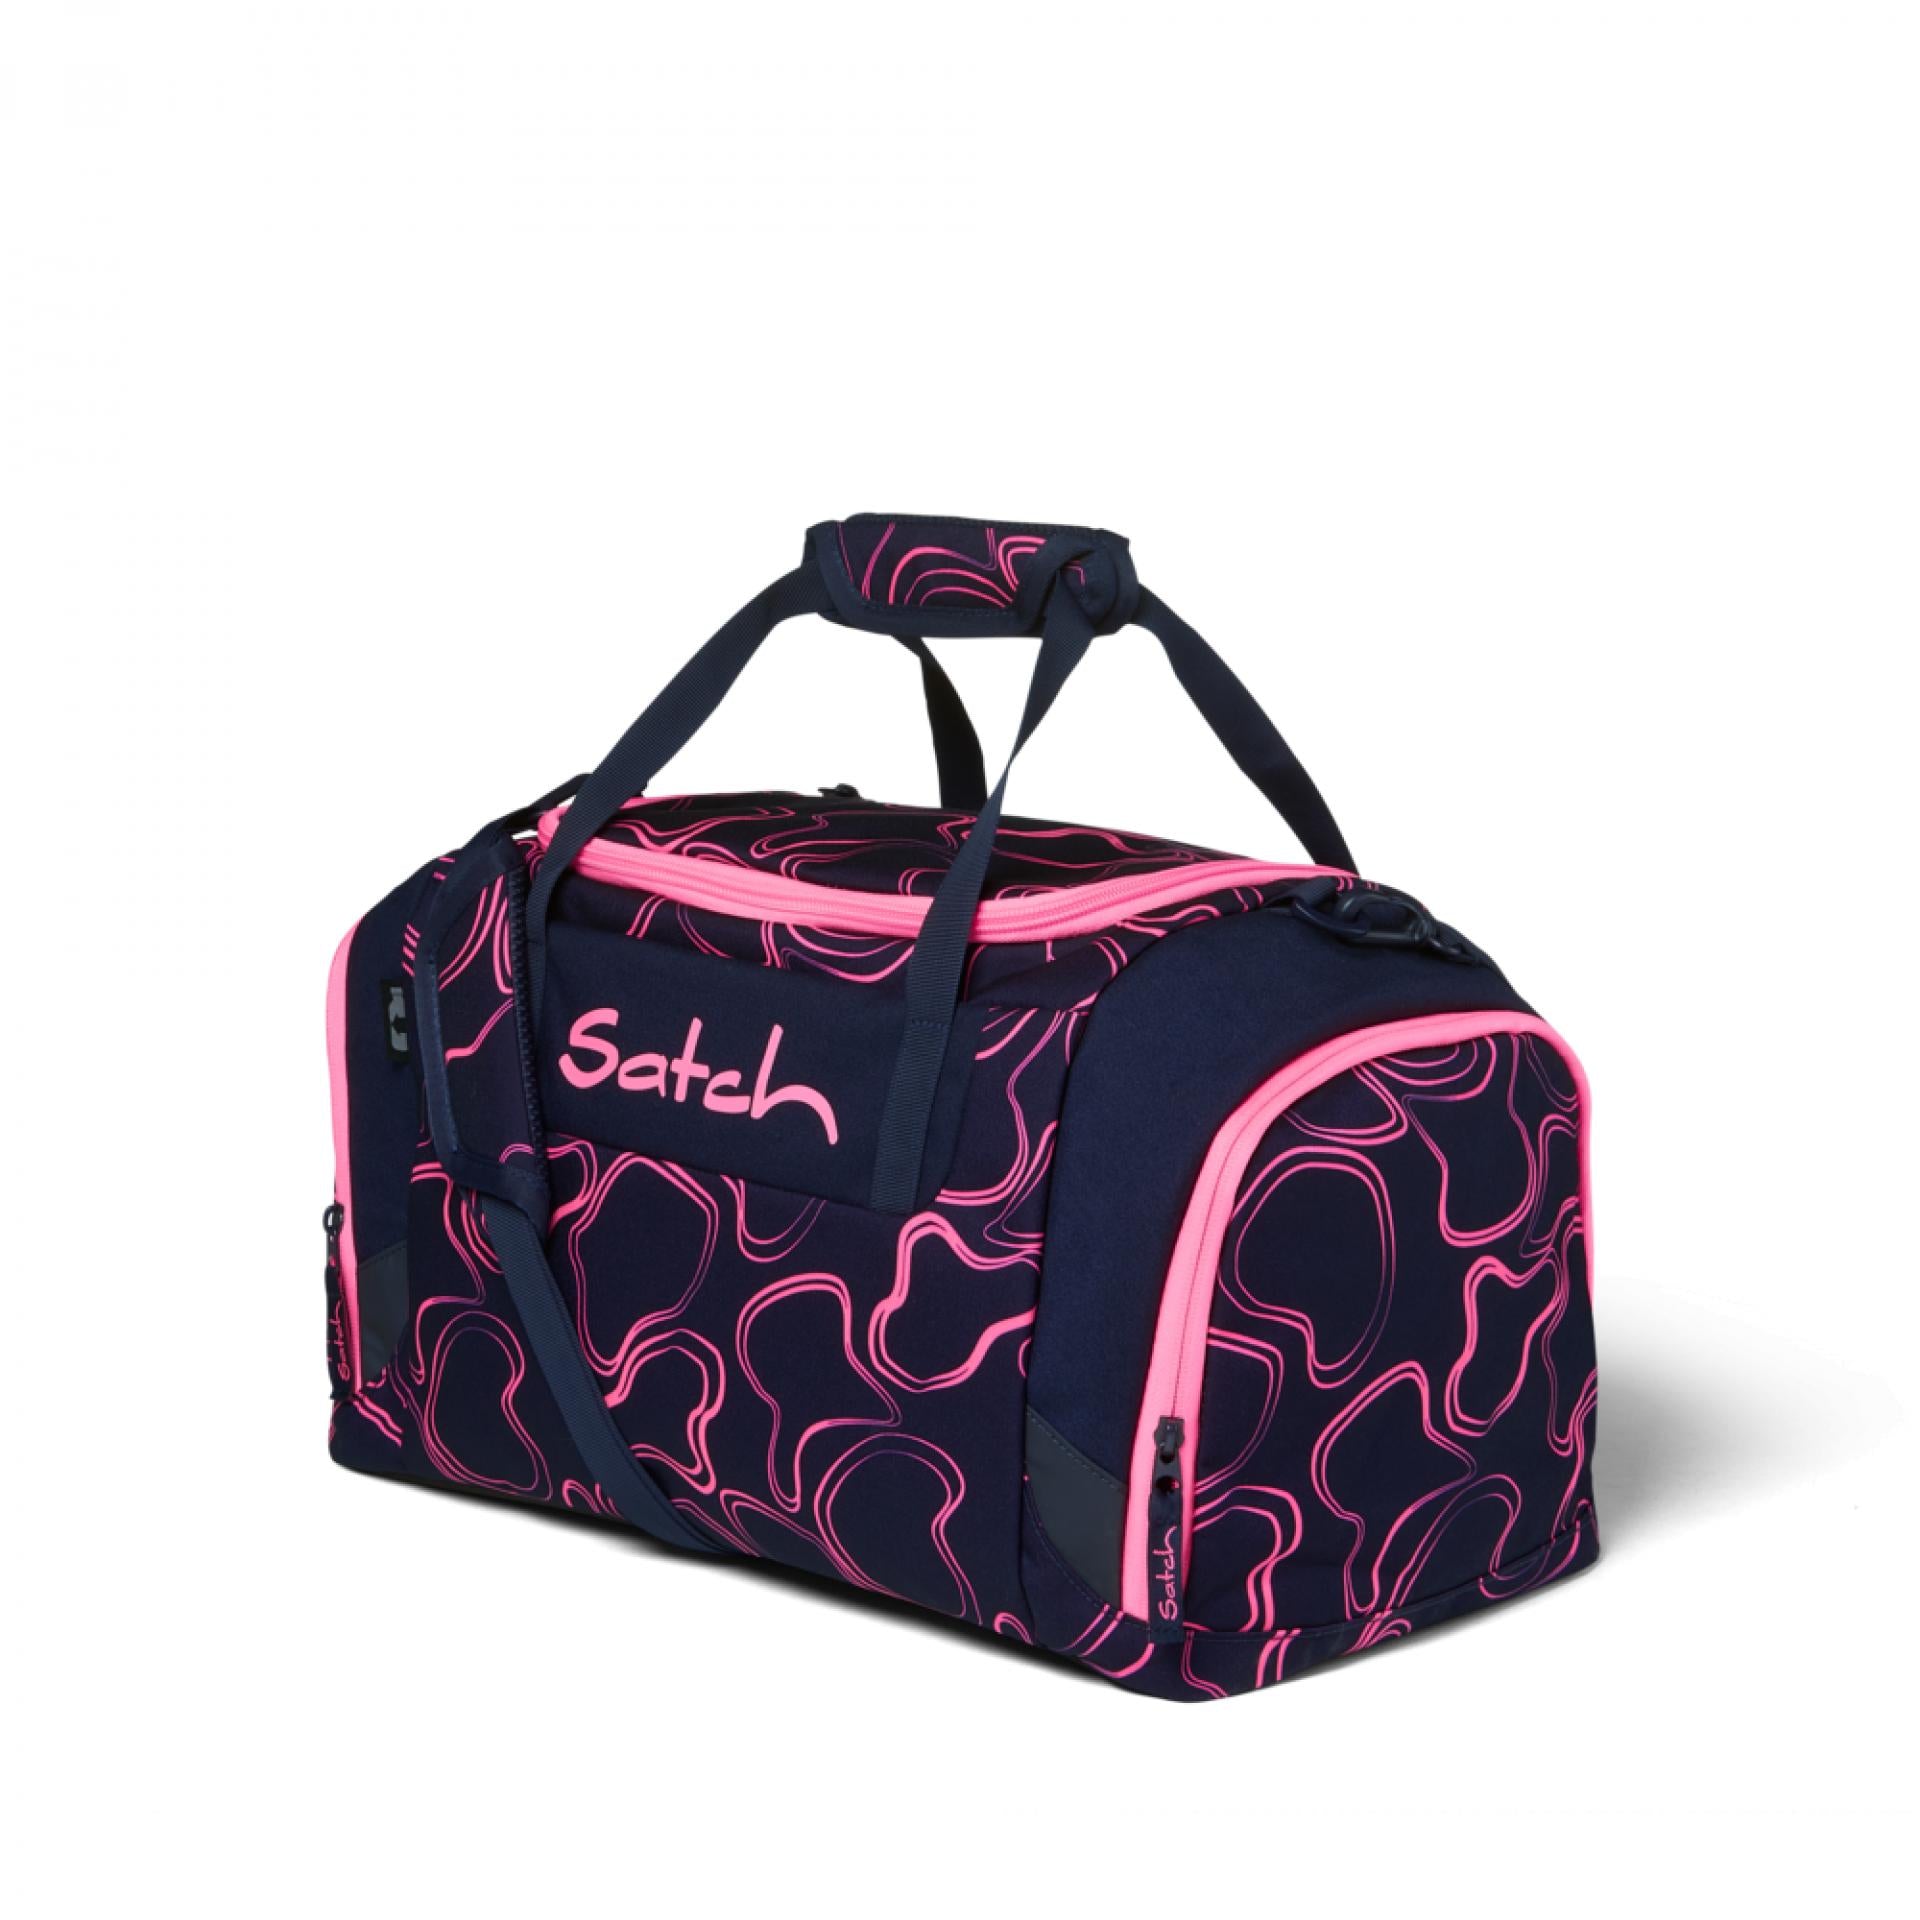 Satch Sporttasche - Farbe: Pink Supreme